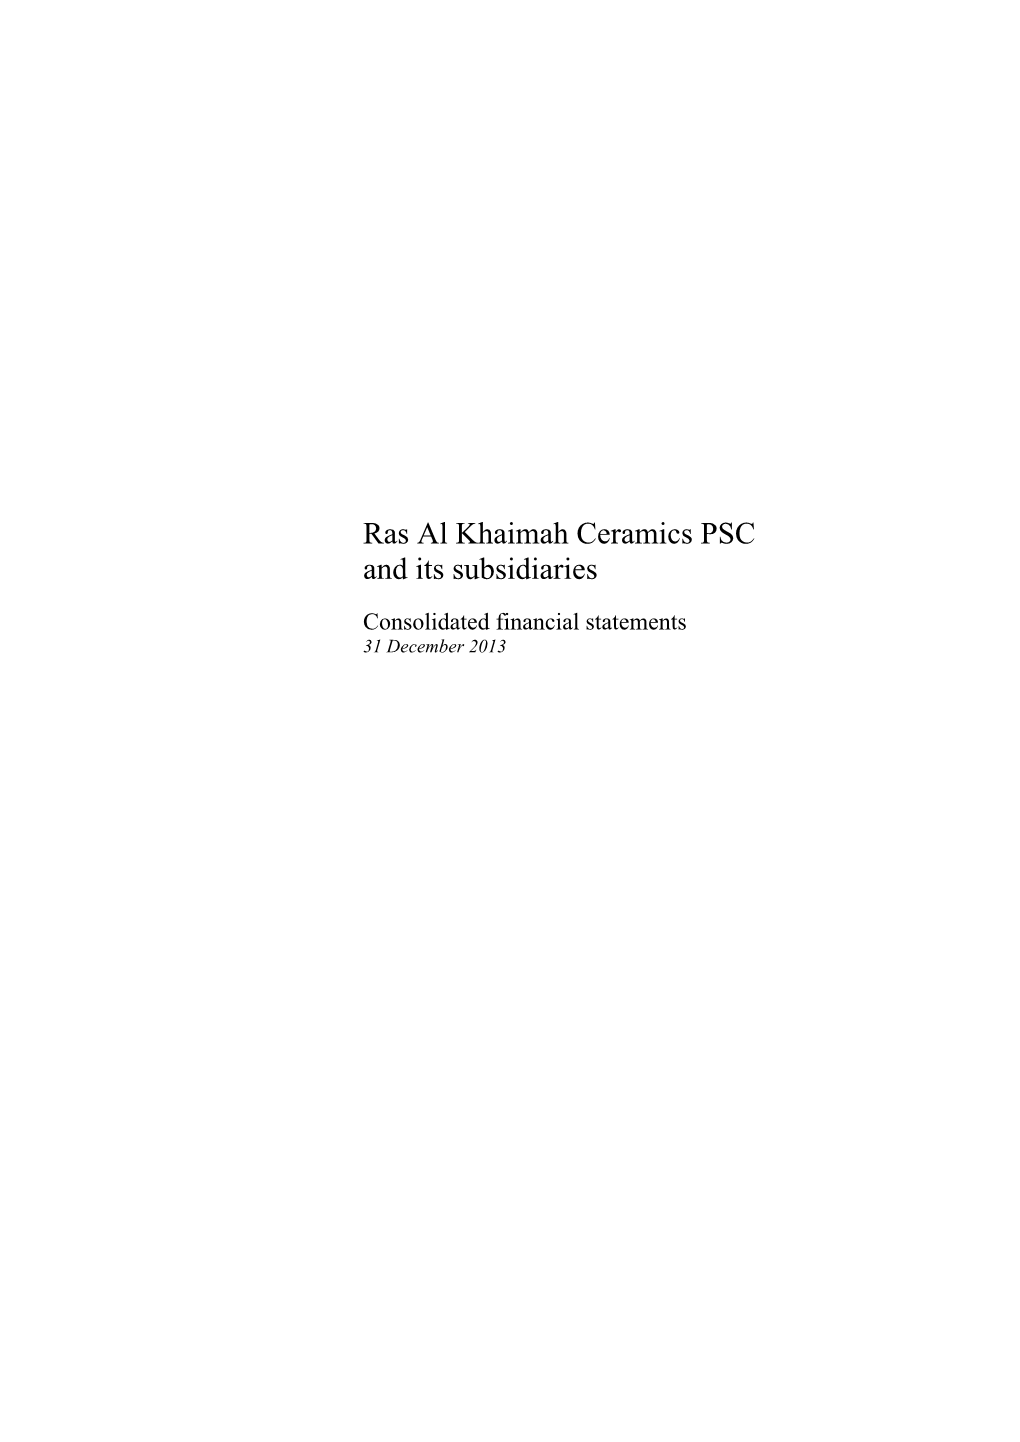 Ras Al Khaimah Ceramics PSC and Its Subsidiaries